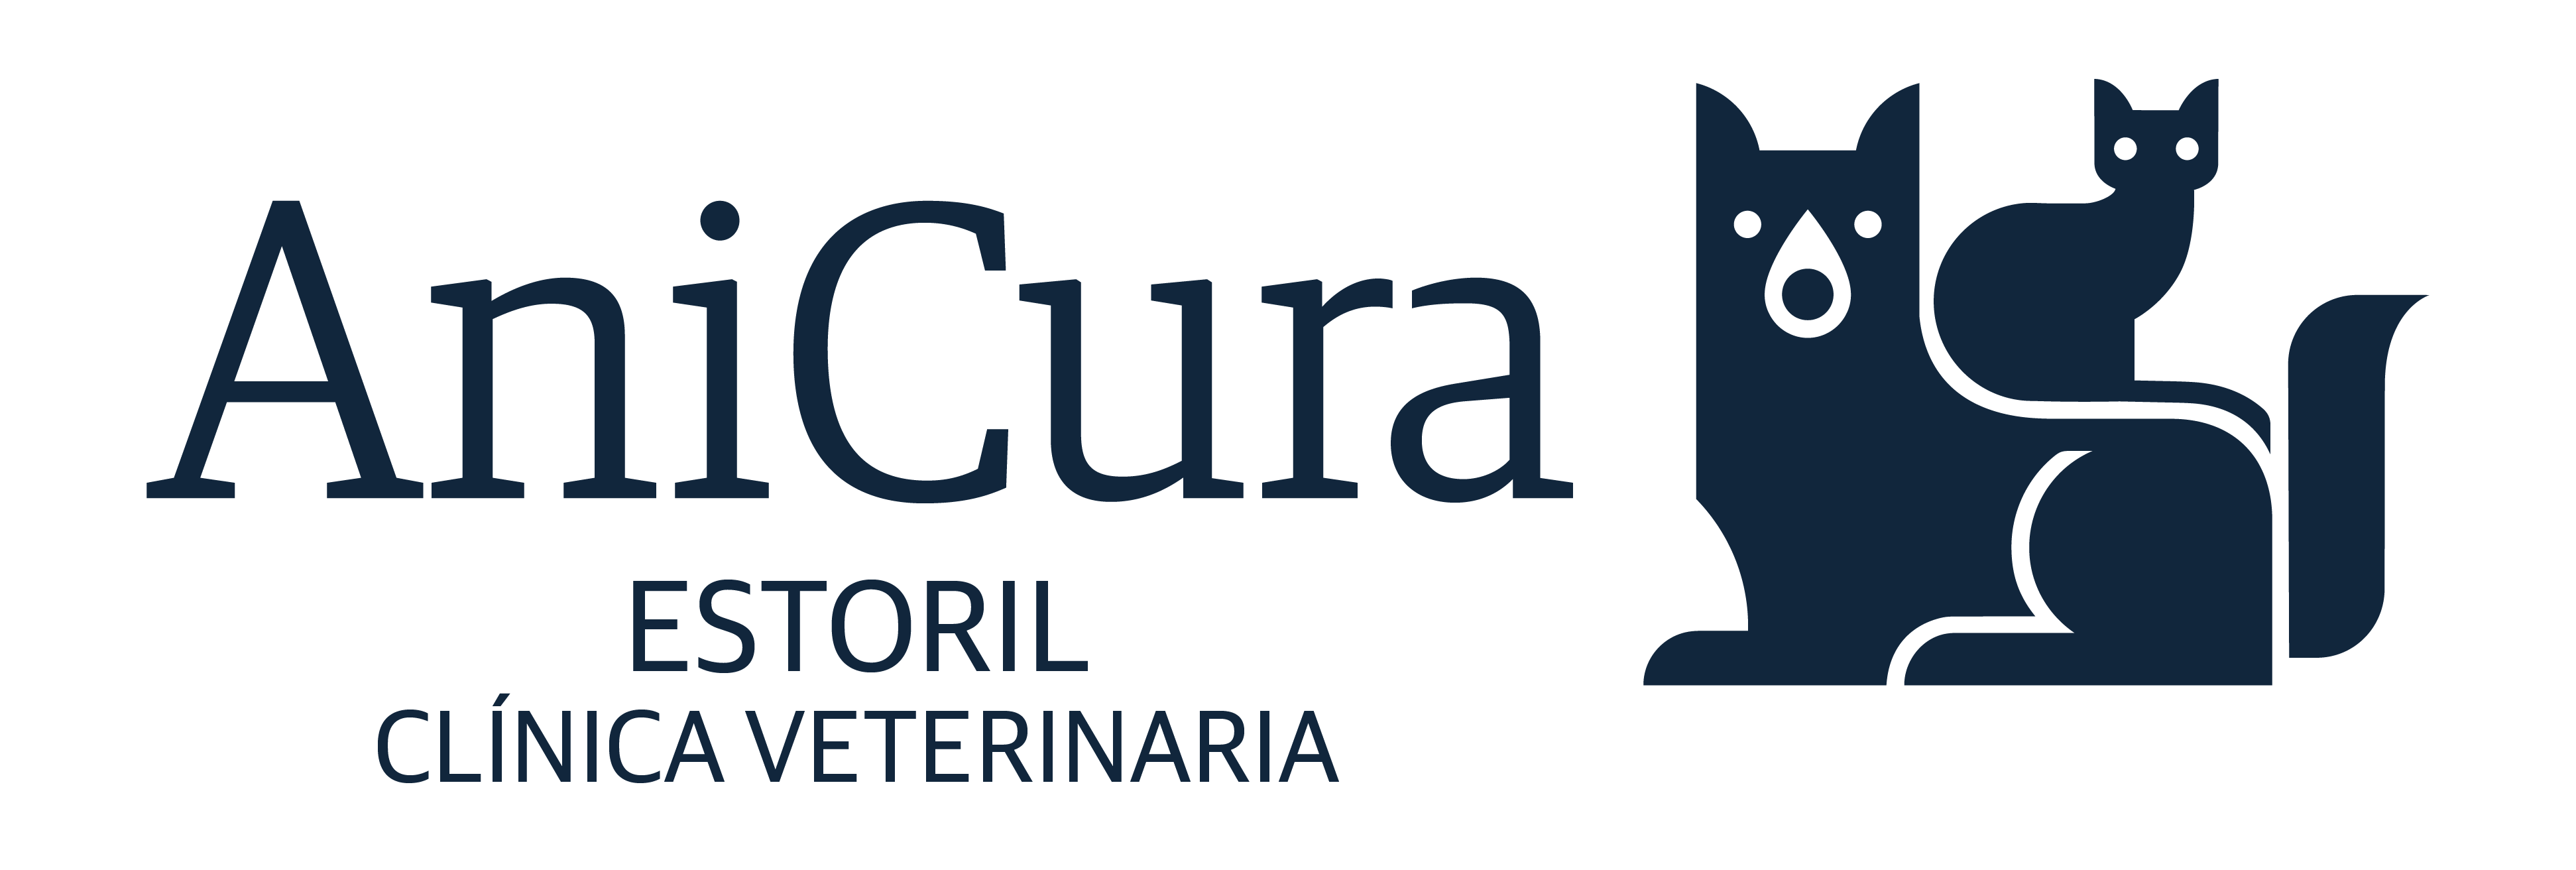 AniCura Estoril Clínica Veterinaria logo